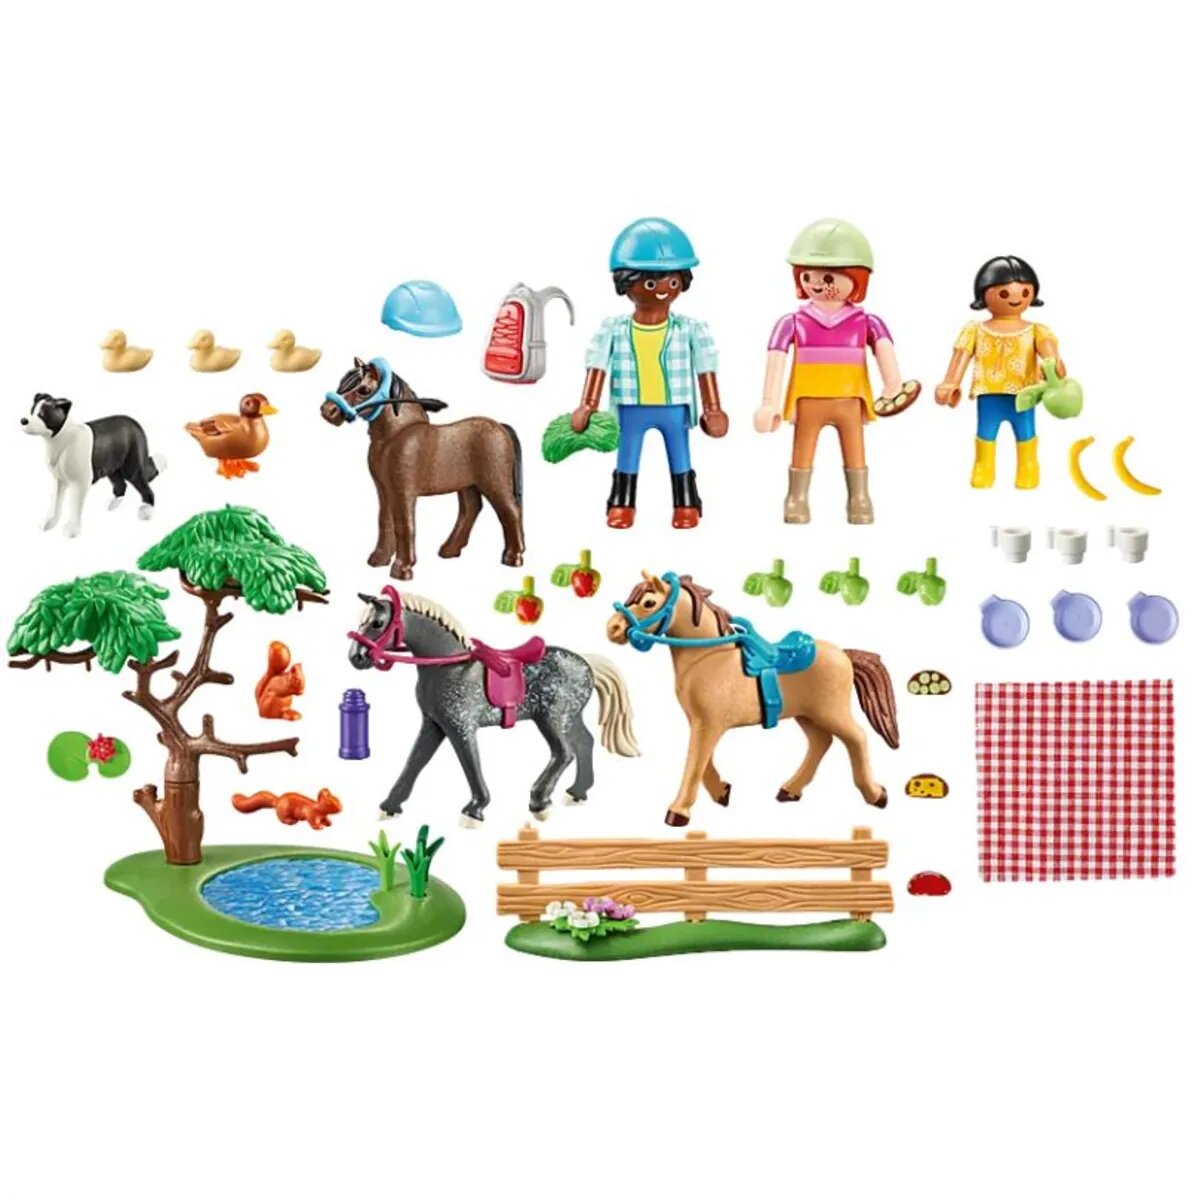 PLAYMOBIL® 71239 Country - Picknickausflug mit Pferden